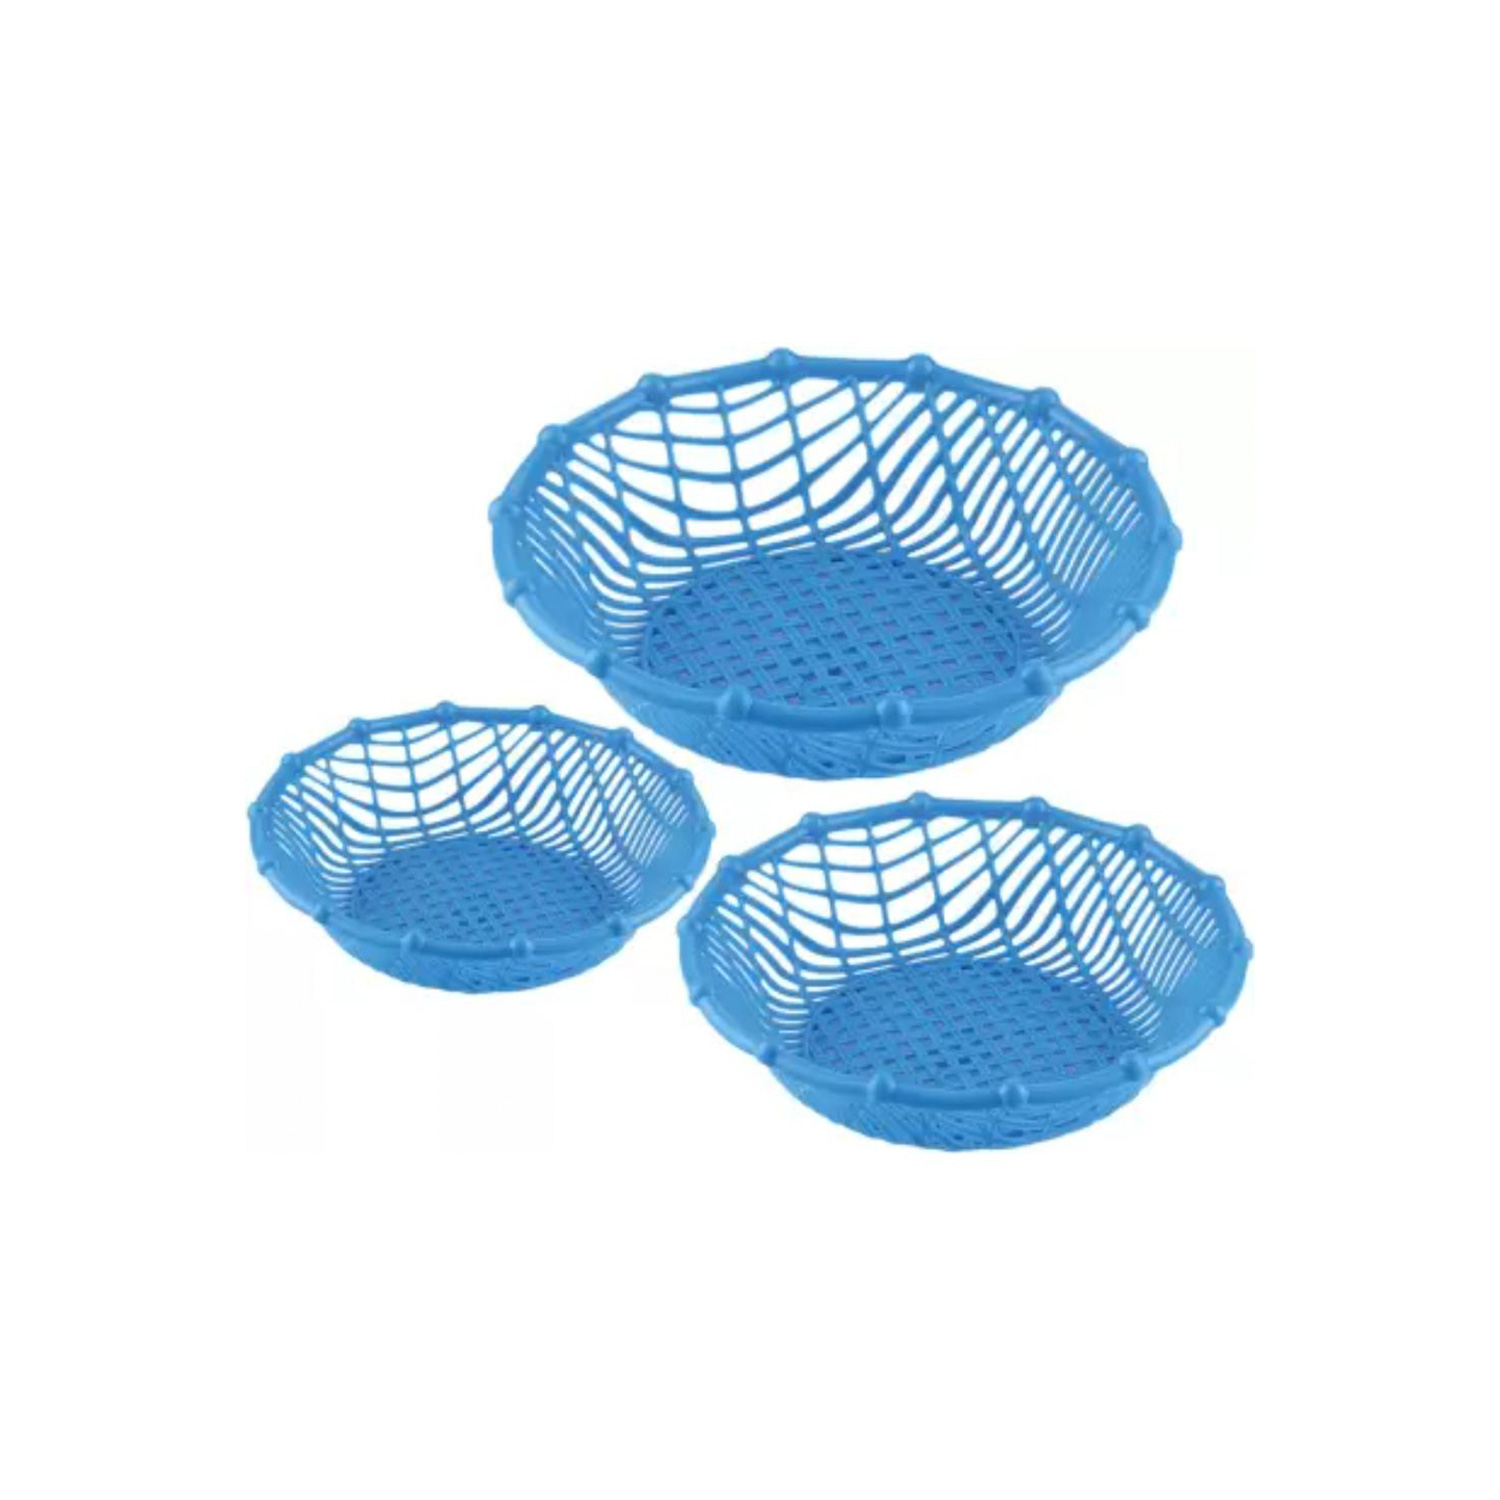 Sukhson India Round Kitchen Fruit and Vegetable Baskets for Storage Set of 3, Plastic Fruit & Vegetable Basket (Blue)